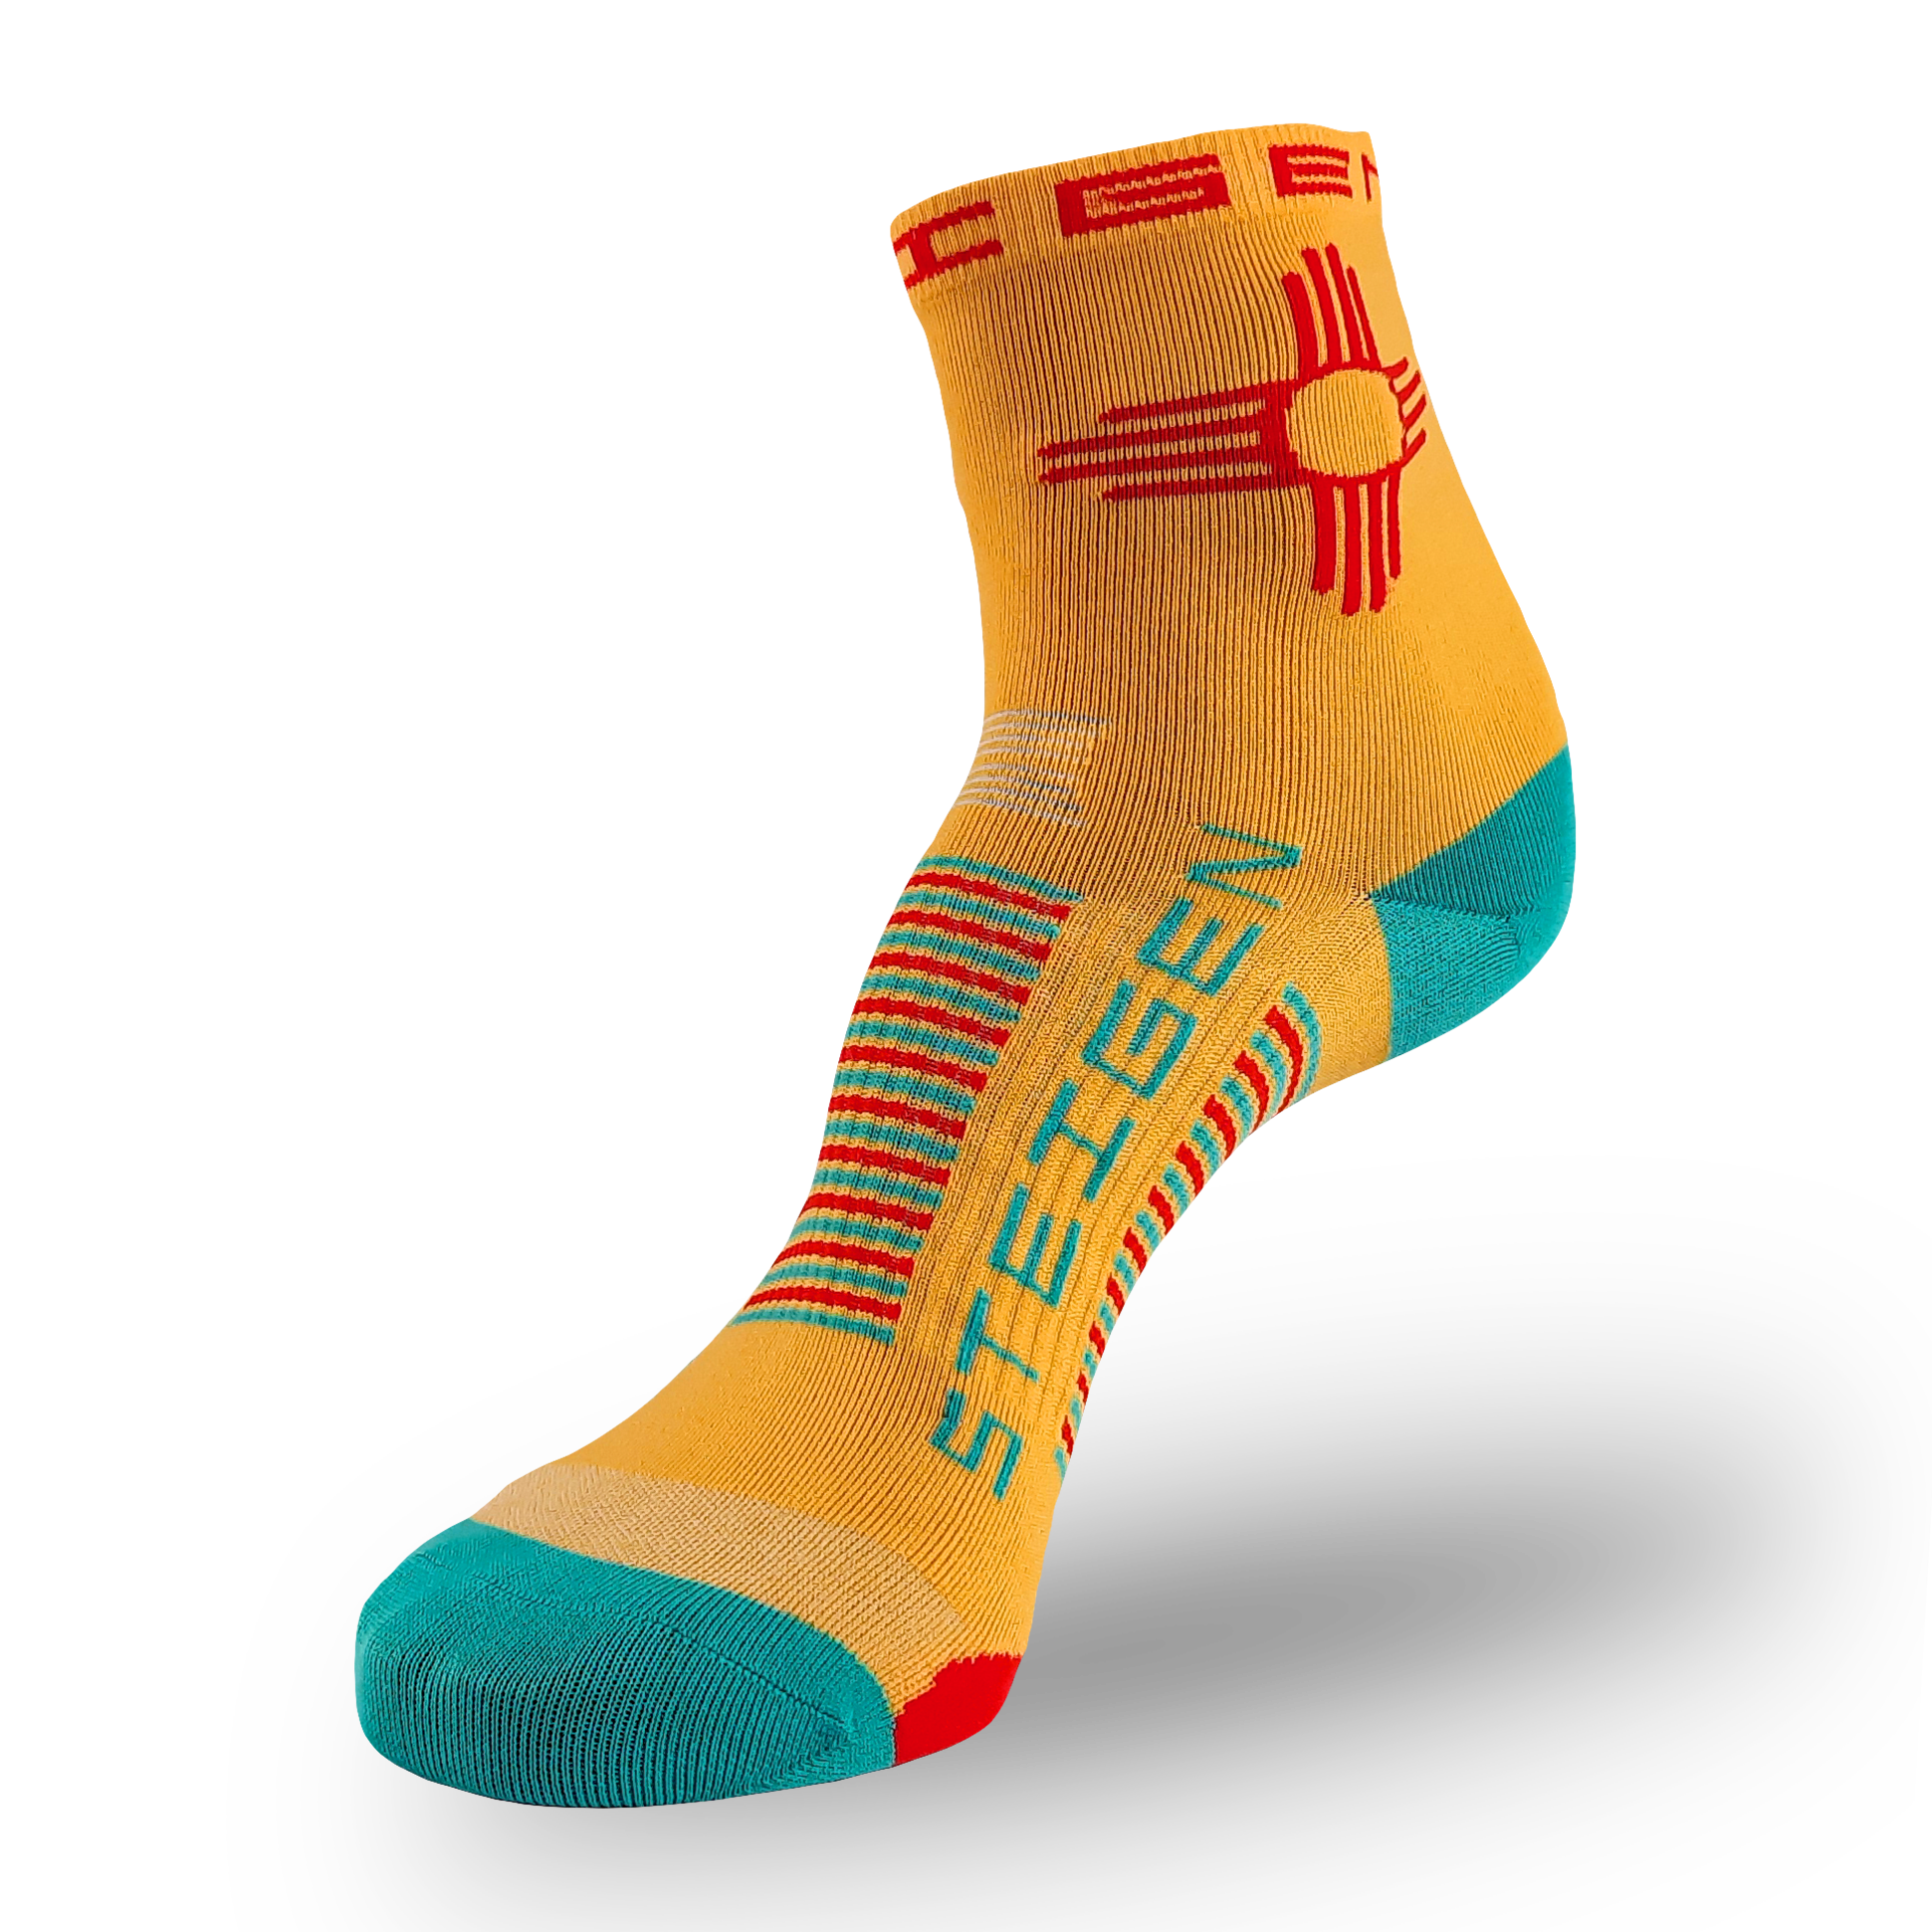 New Mexico Running Socks ½ Length